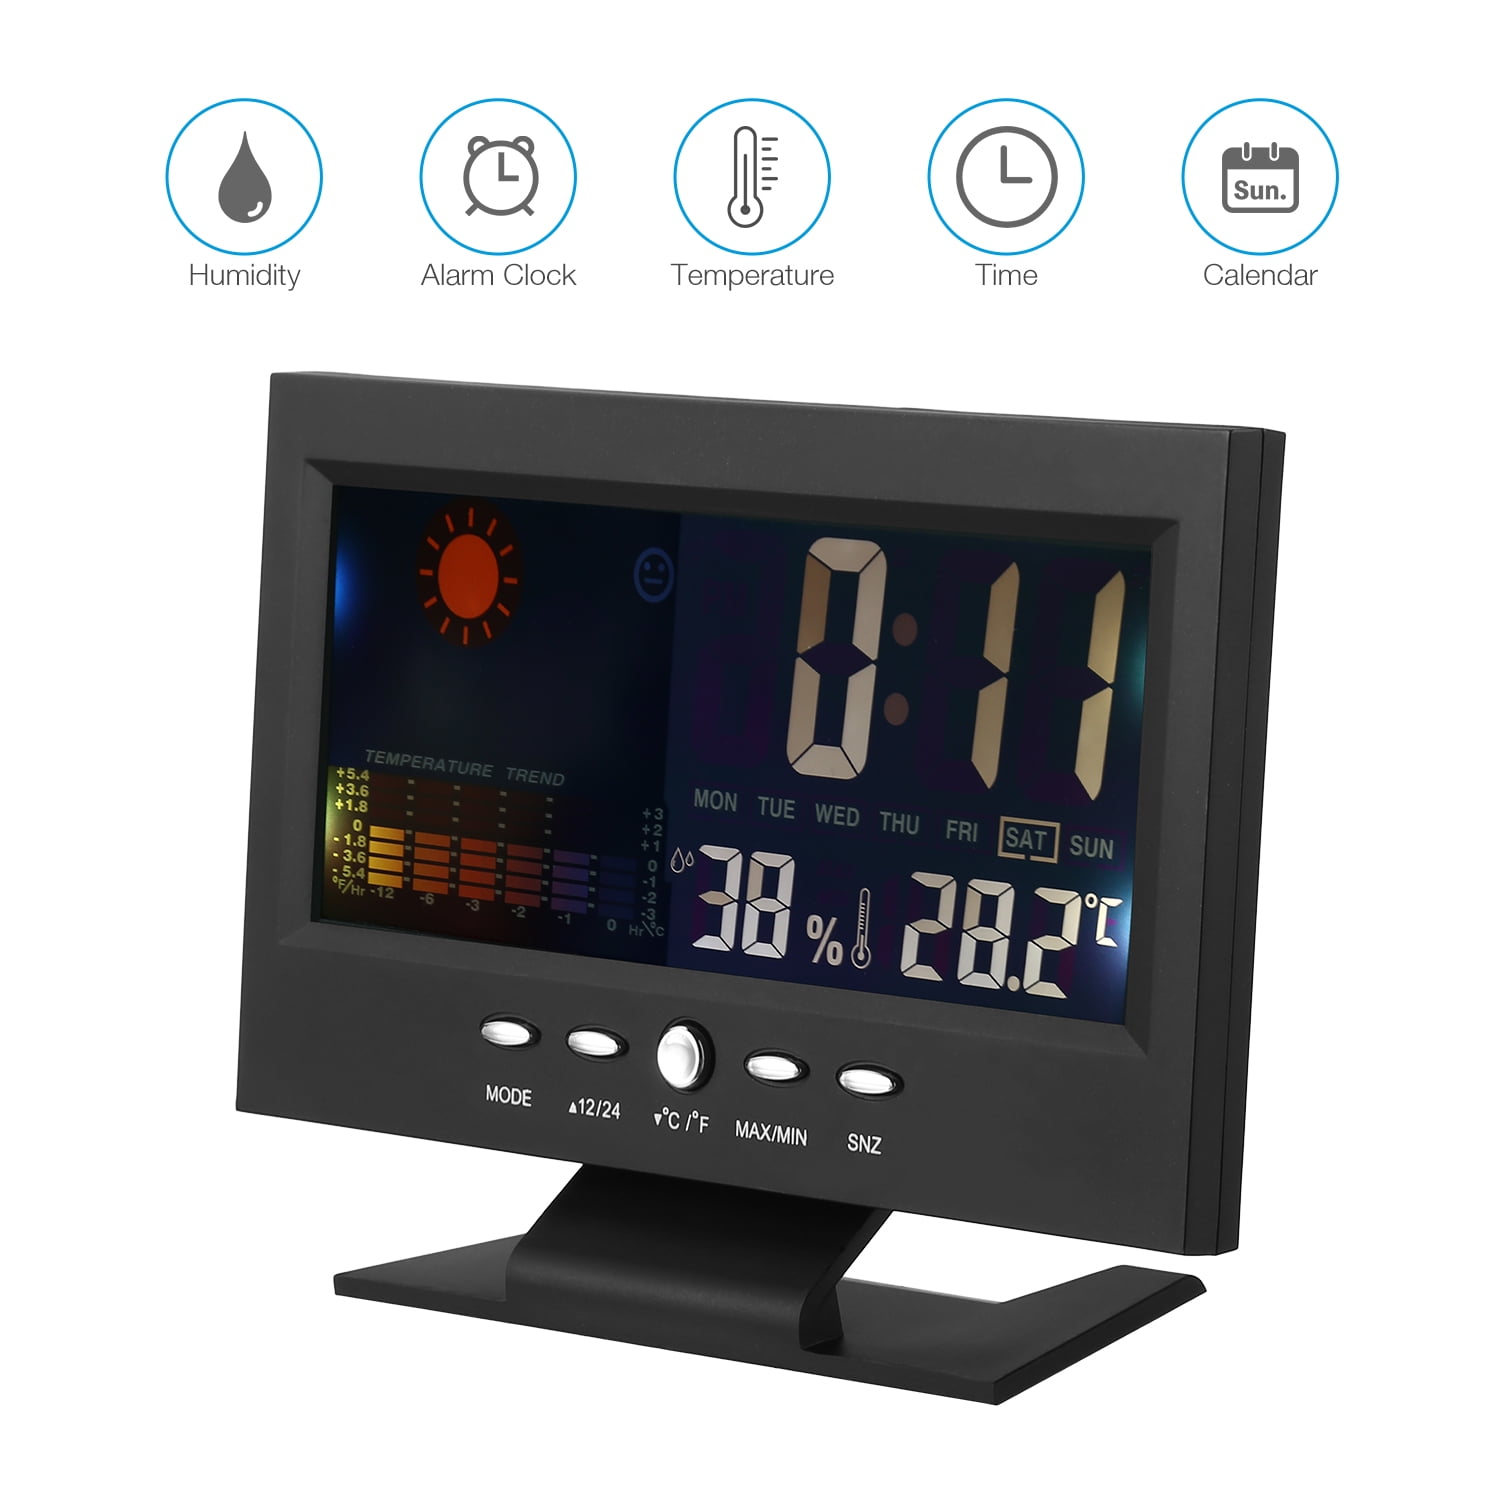 Alarm Clock LED Color Display Digital Voice Control Snooze Calendar Weather WRW 